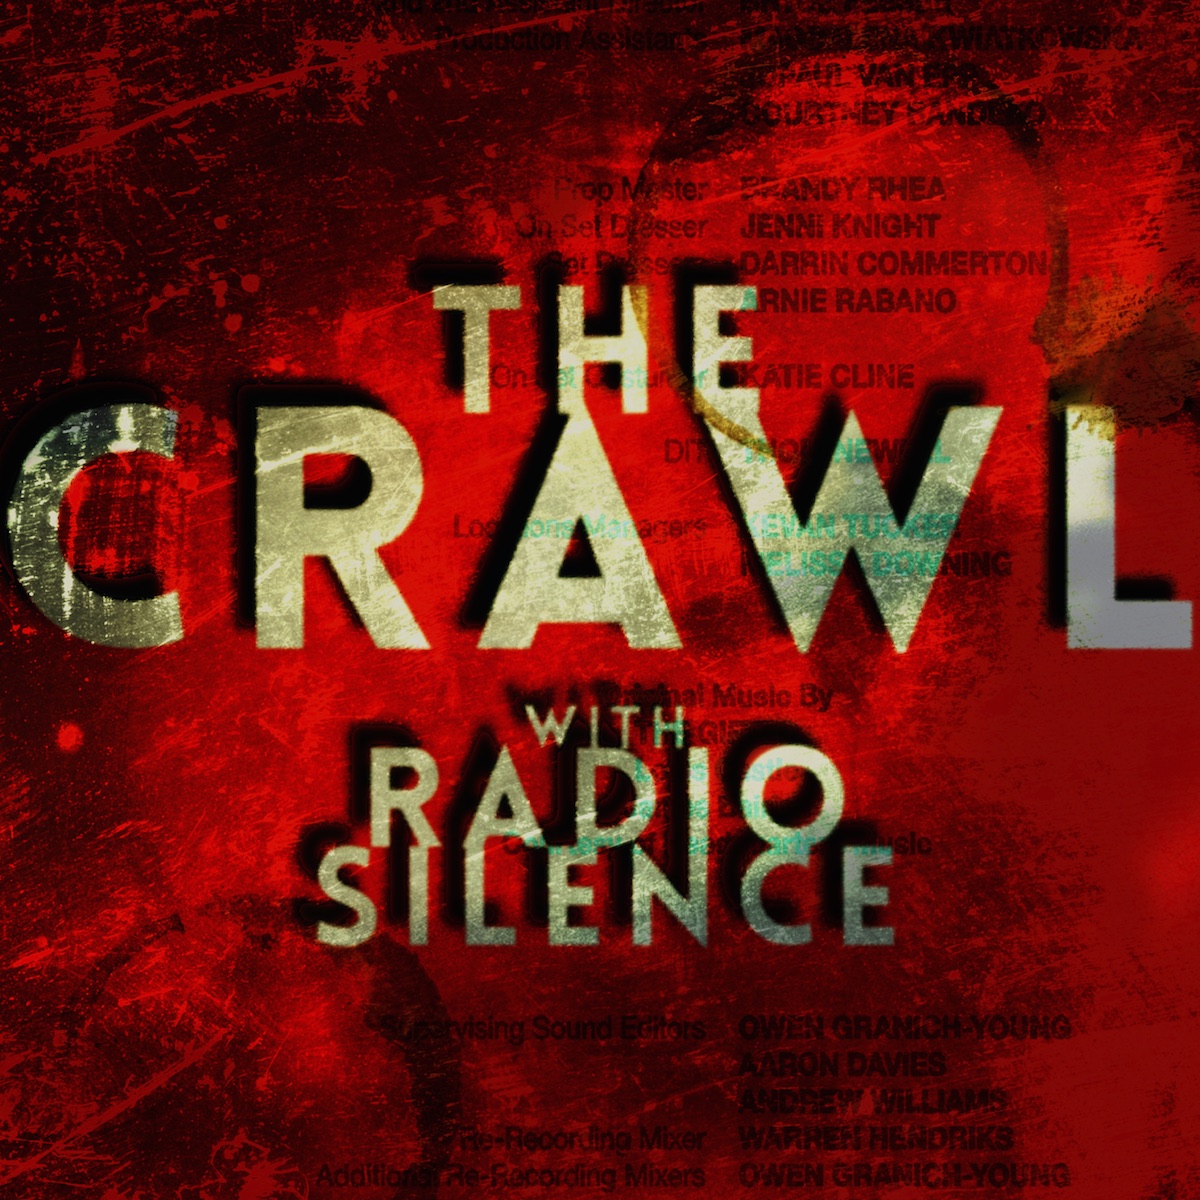 The Crawl with Radio Silence